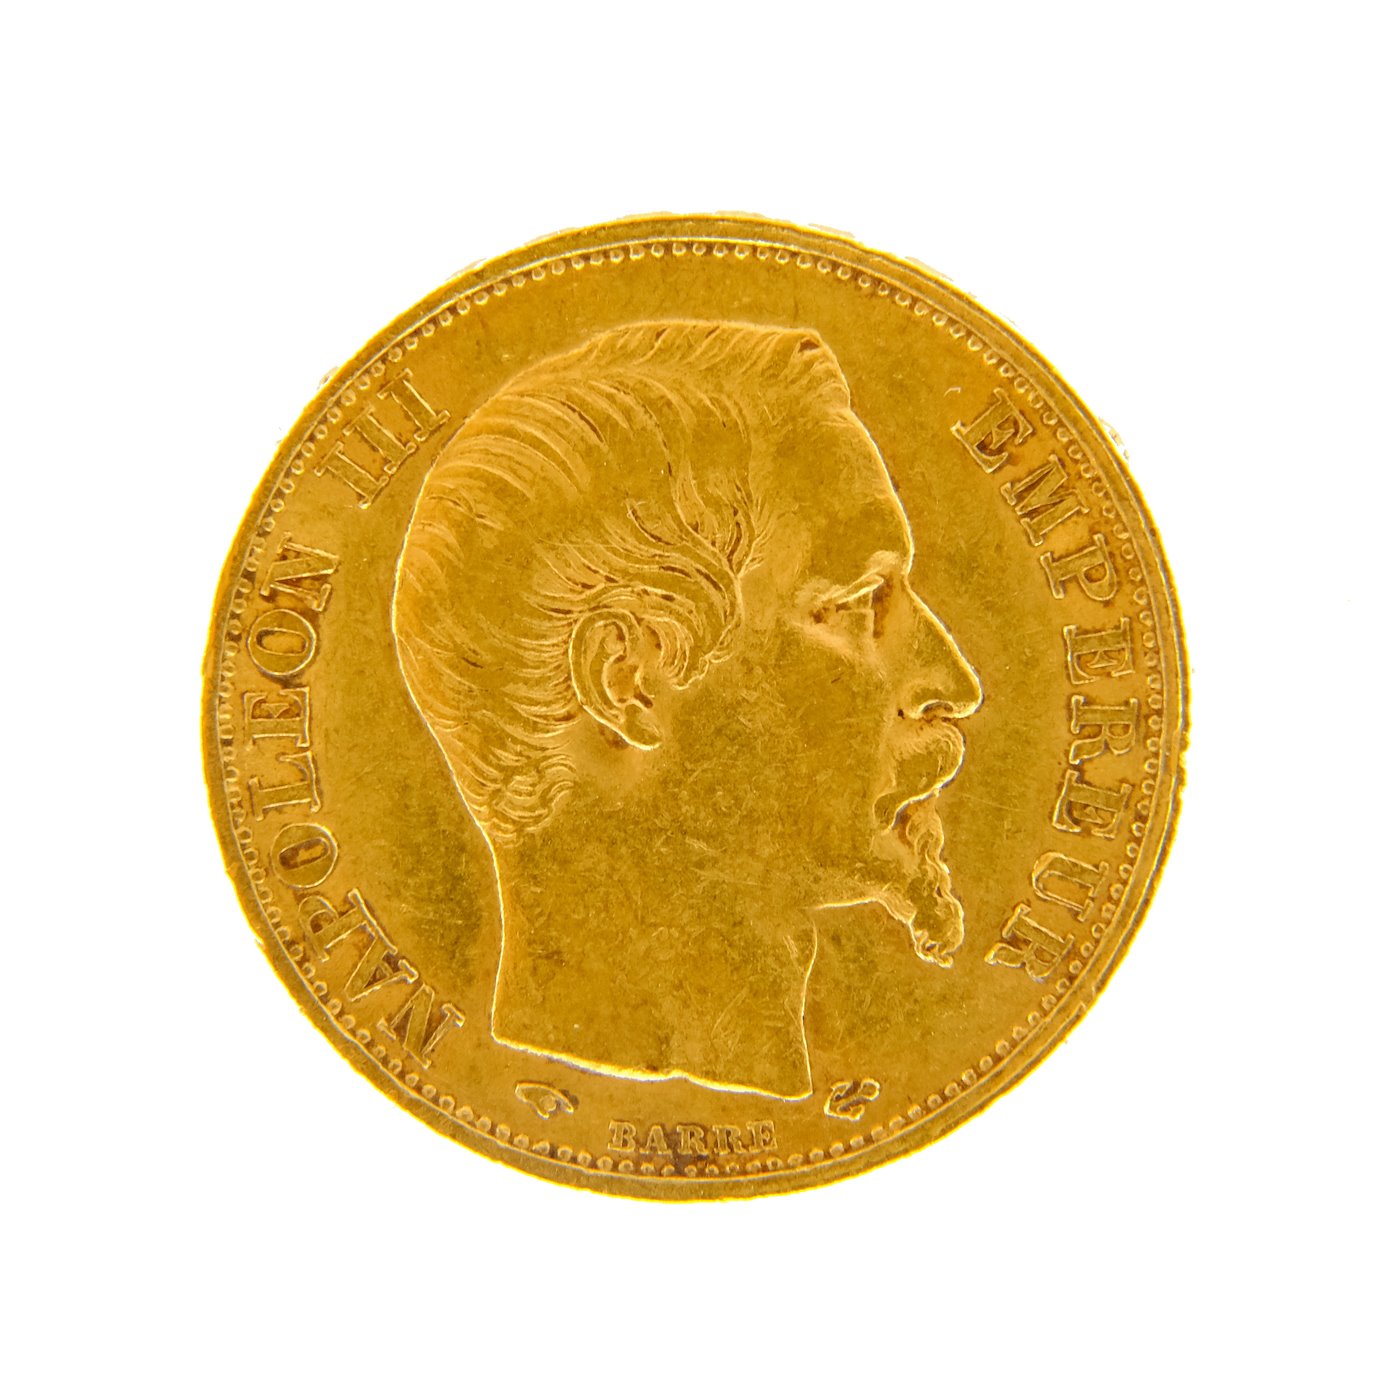 .. - Francie zlatý 20 frank NAPOLEON III. 1862 BB, zlato 900/1000, hrubá hmotnost 6,45g